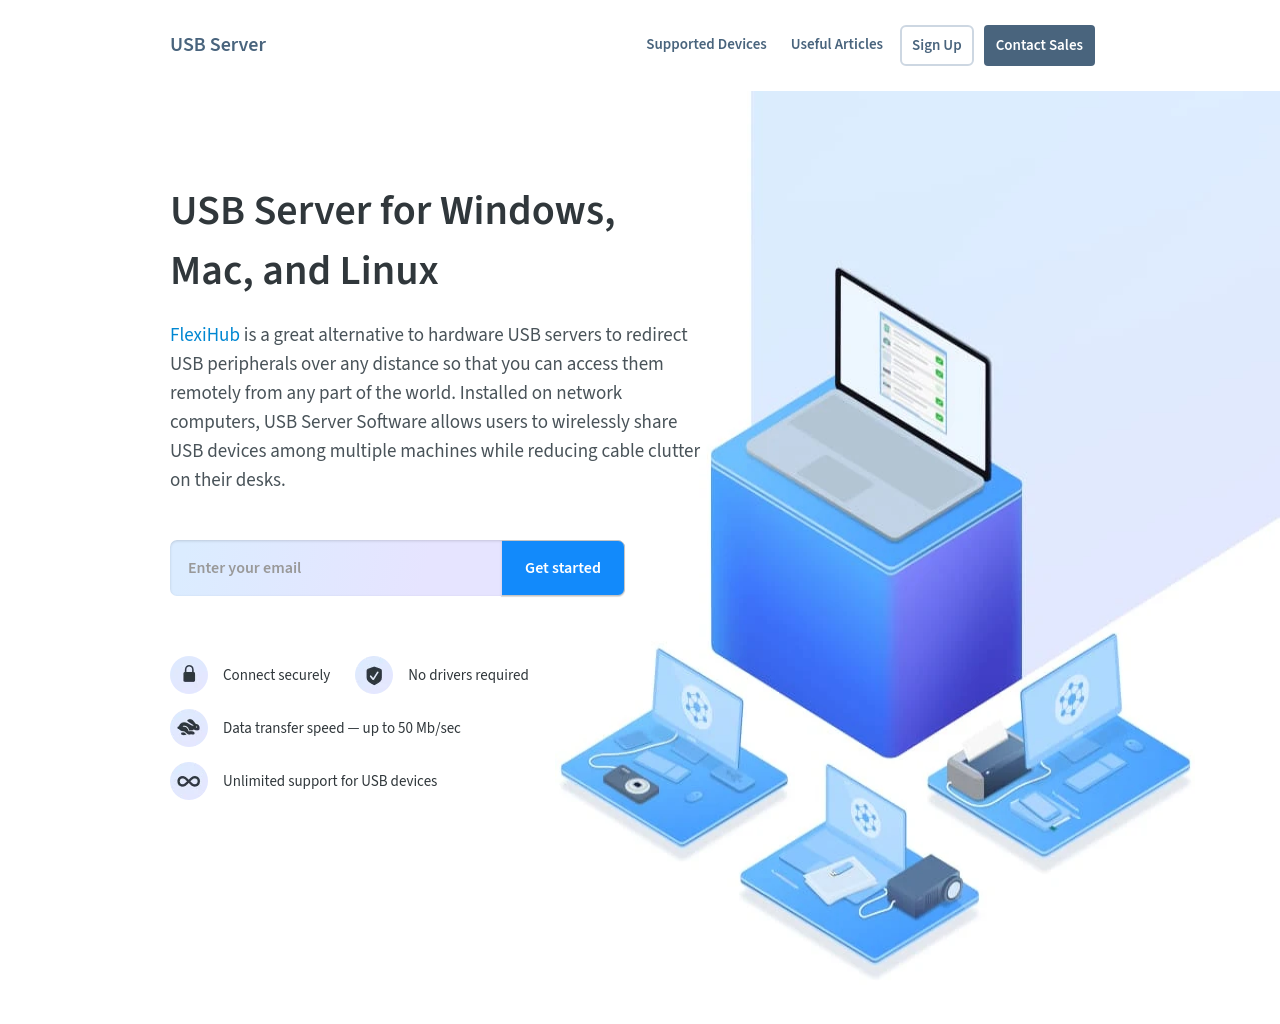 usbwebserver.net